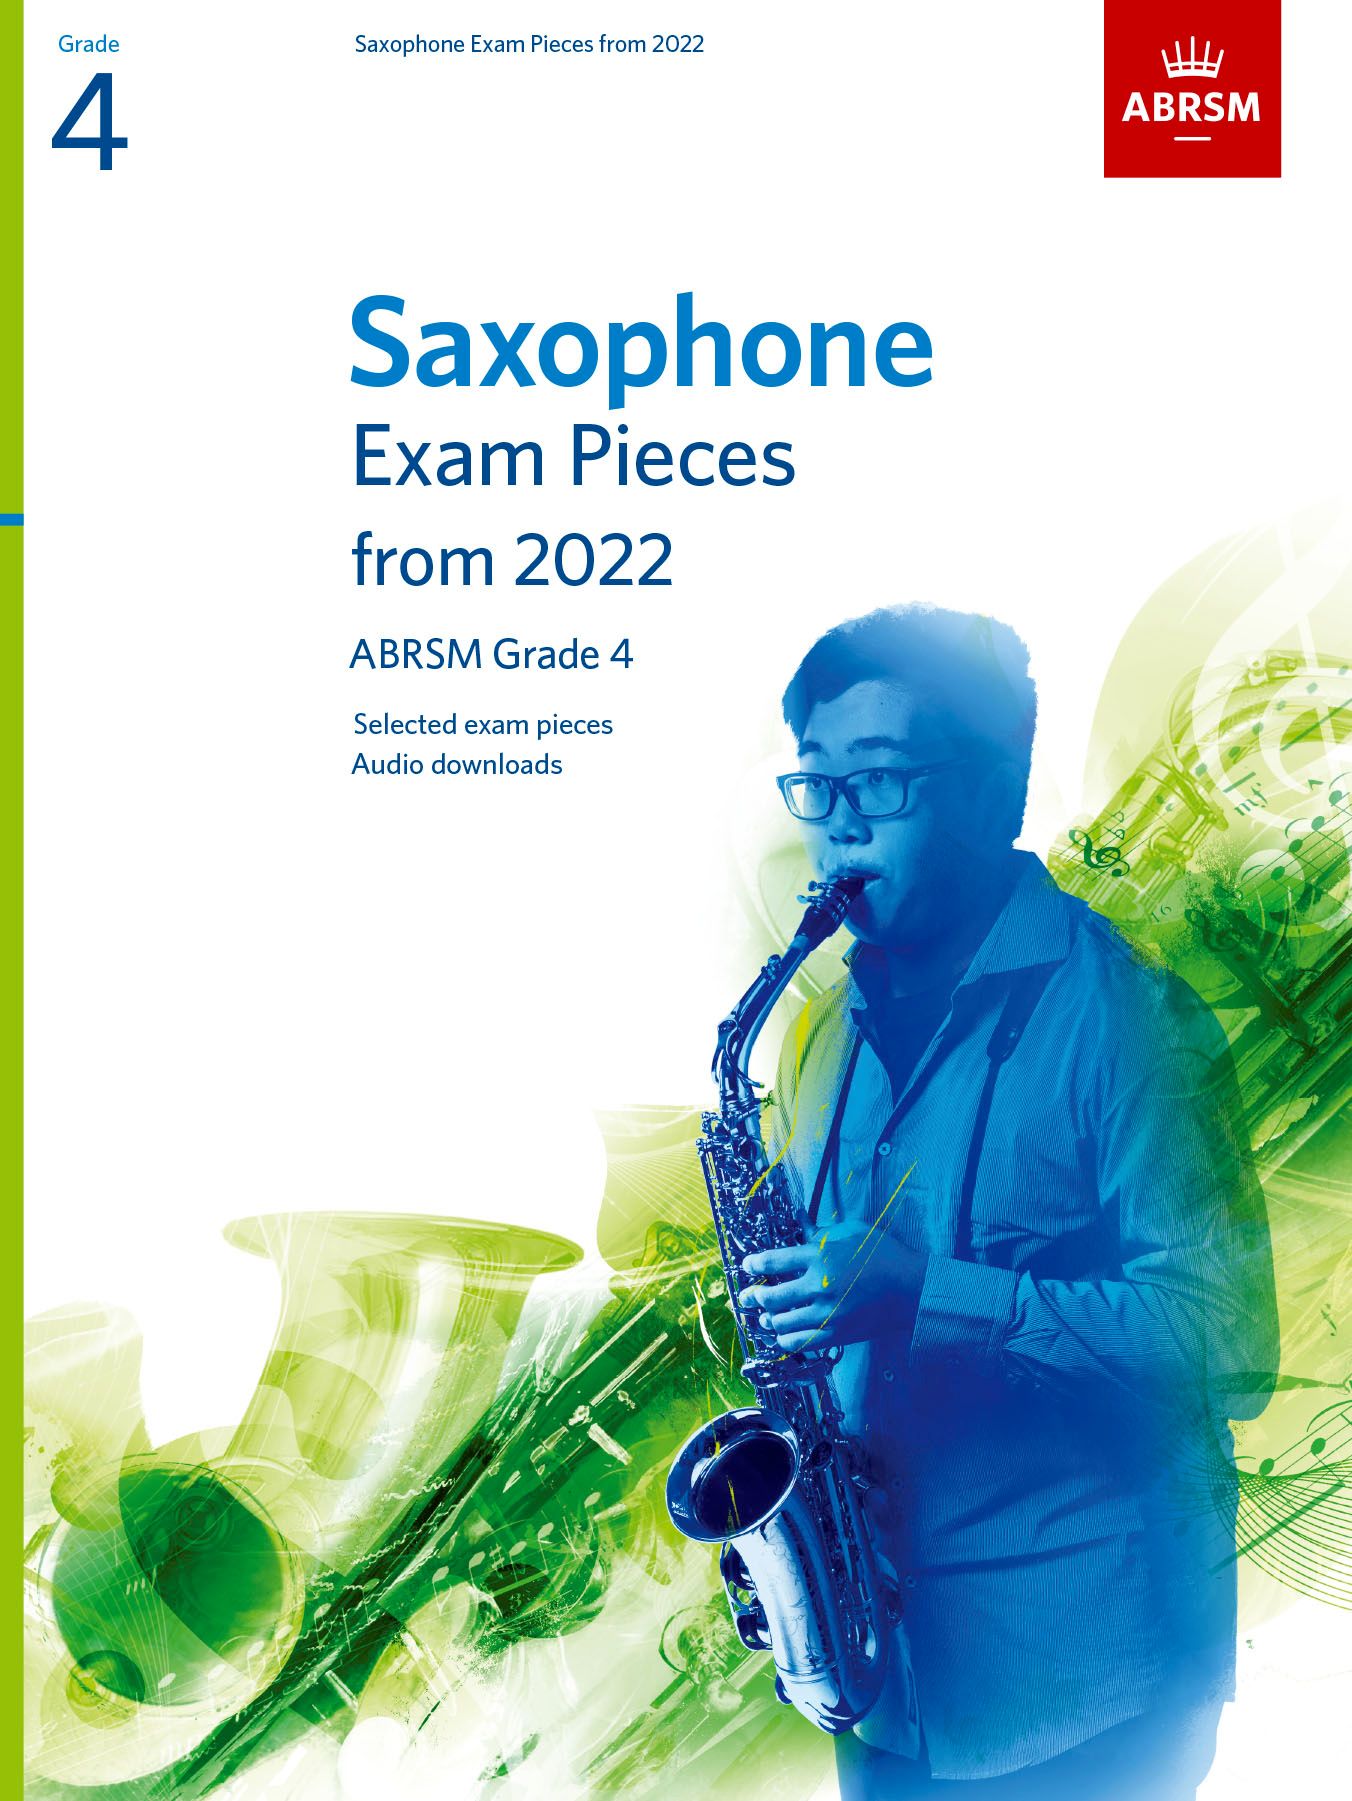 ABRSM Saxophone Exam Pieces from 2022, Grade 4